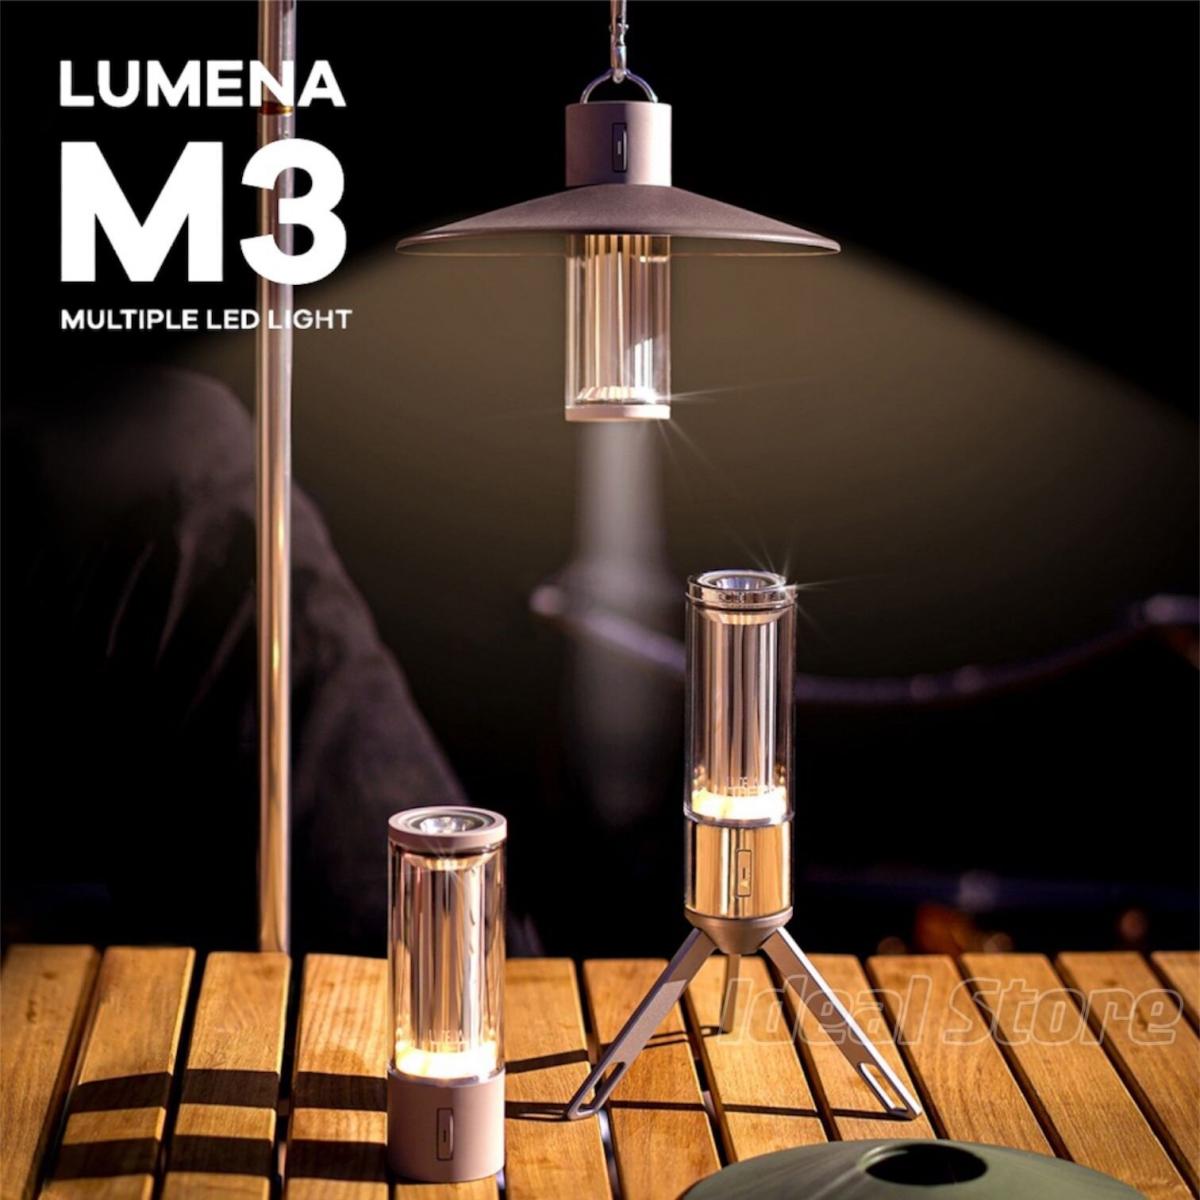 Lumena - M3 三合一多用途照明LED燈｜露營燈｜防水燈｜掛燈